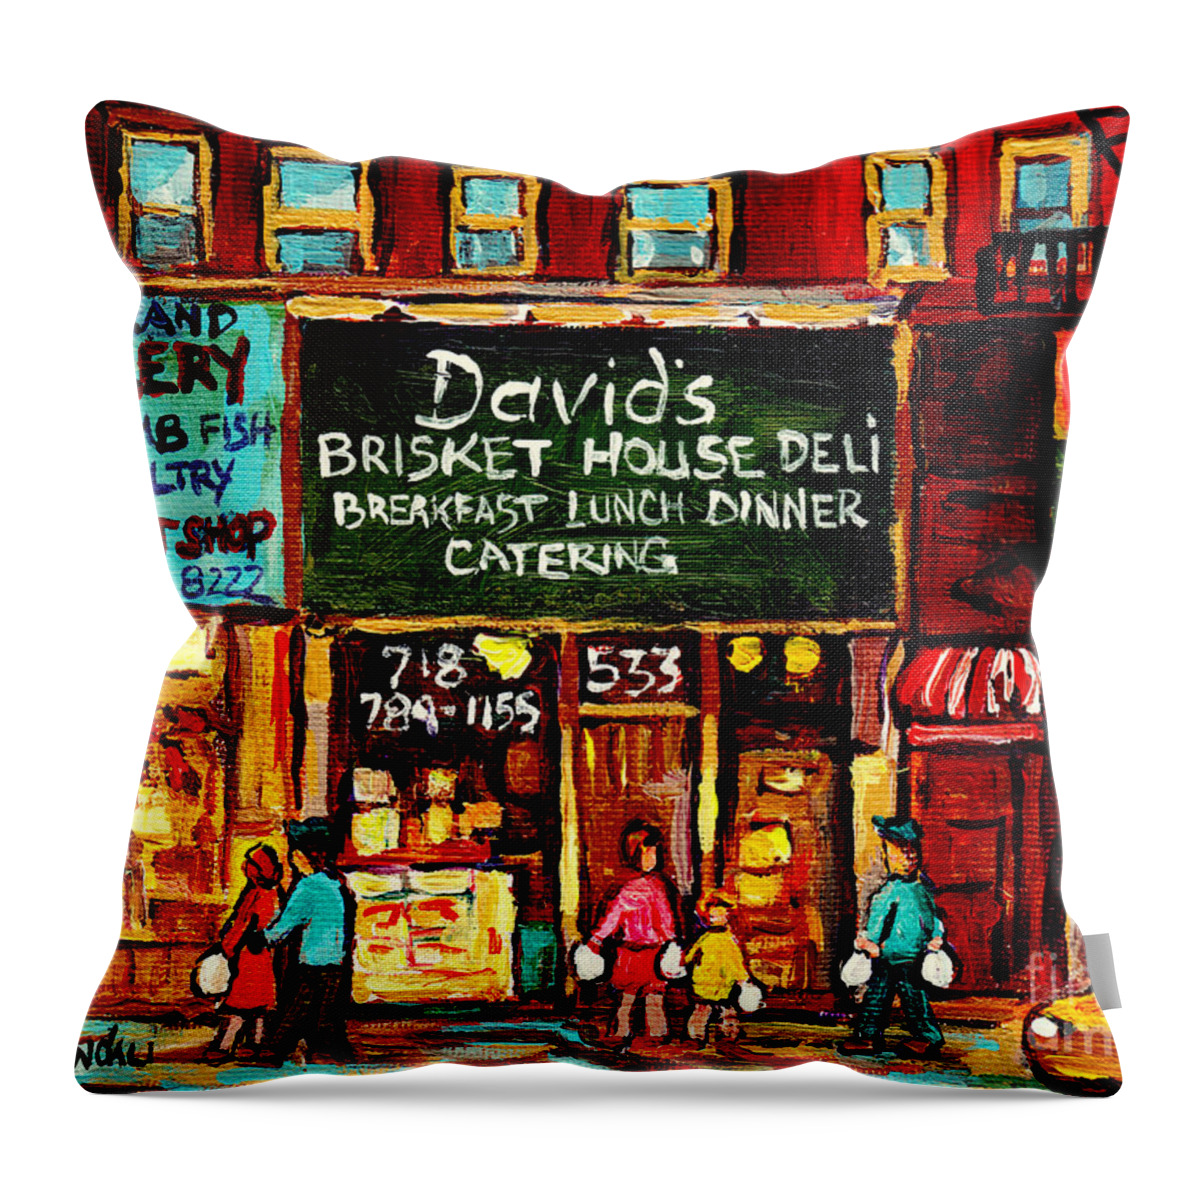 New York Throw Pillow featuring the painting C Spandau Fine Artist Paints Best New York City Restaurants David's Brisket House Deli Crown Heights by Carole Spandau